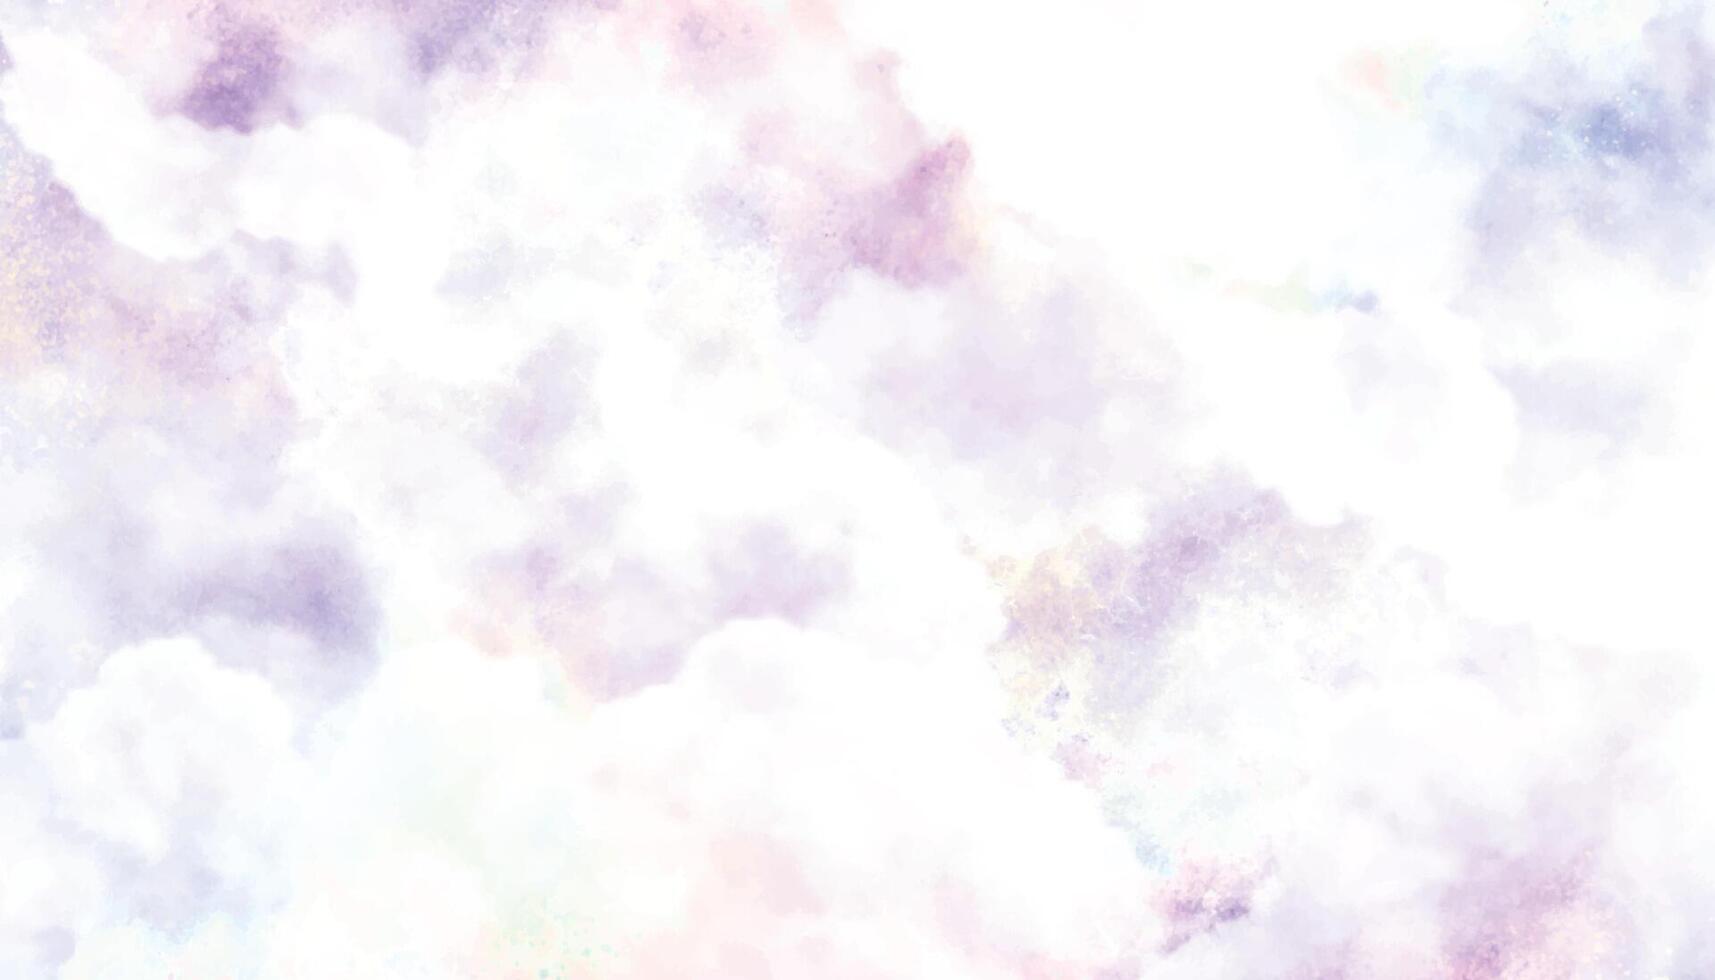 abstract kleurrijk waterverf achtergrond met wolken. modern wit grunge achtergrond. kleurrijk zacht licht veelkleurig schilderij achtergrond vector